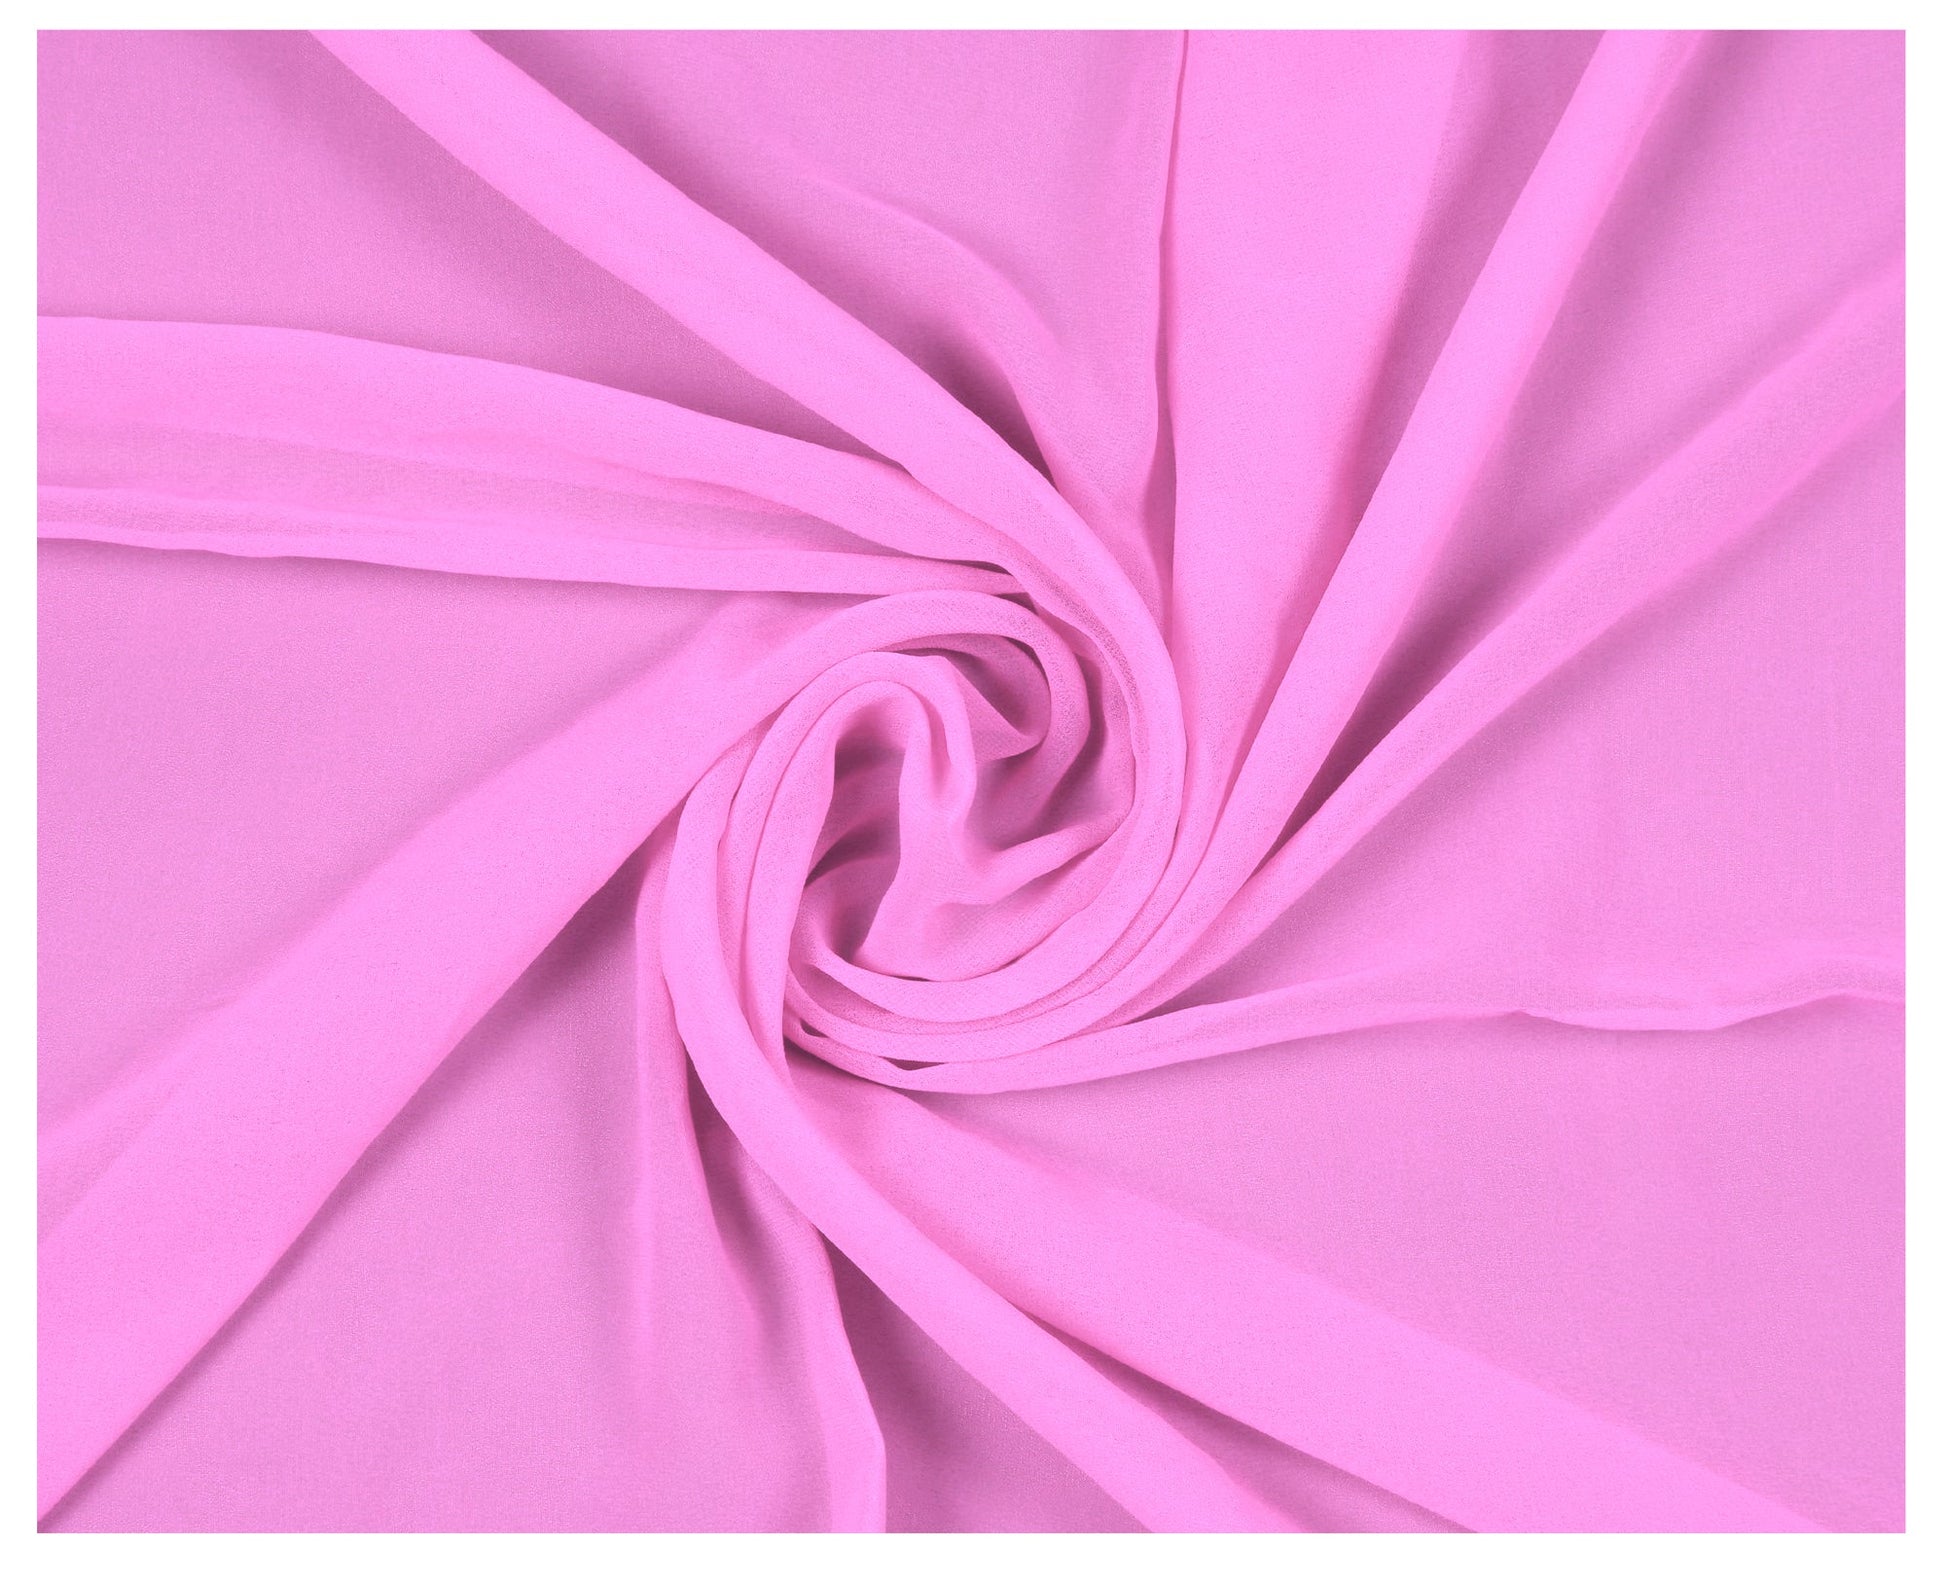 Bubblegum Pink,9be1a5f1-0415-465c-b8ae-e790314d20bd